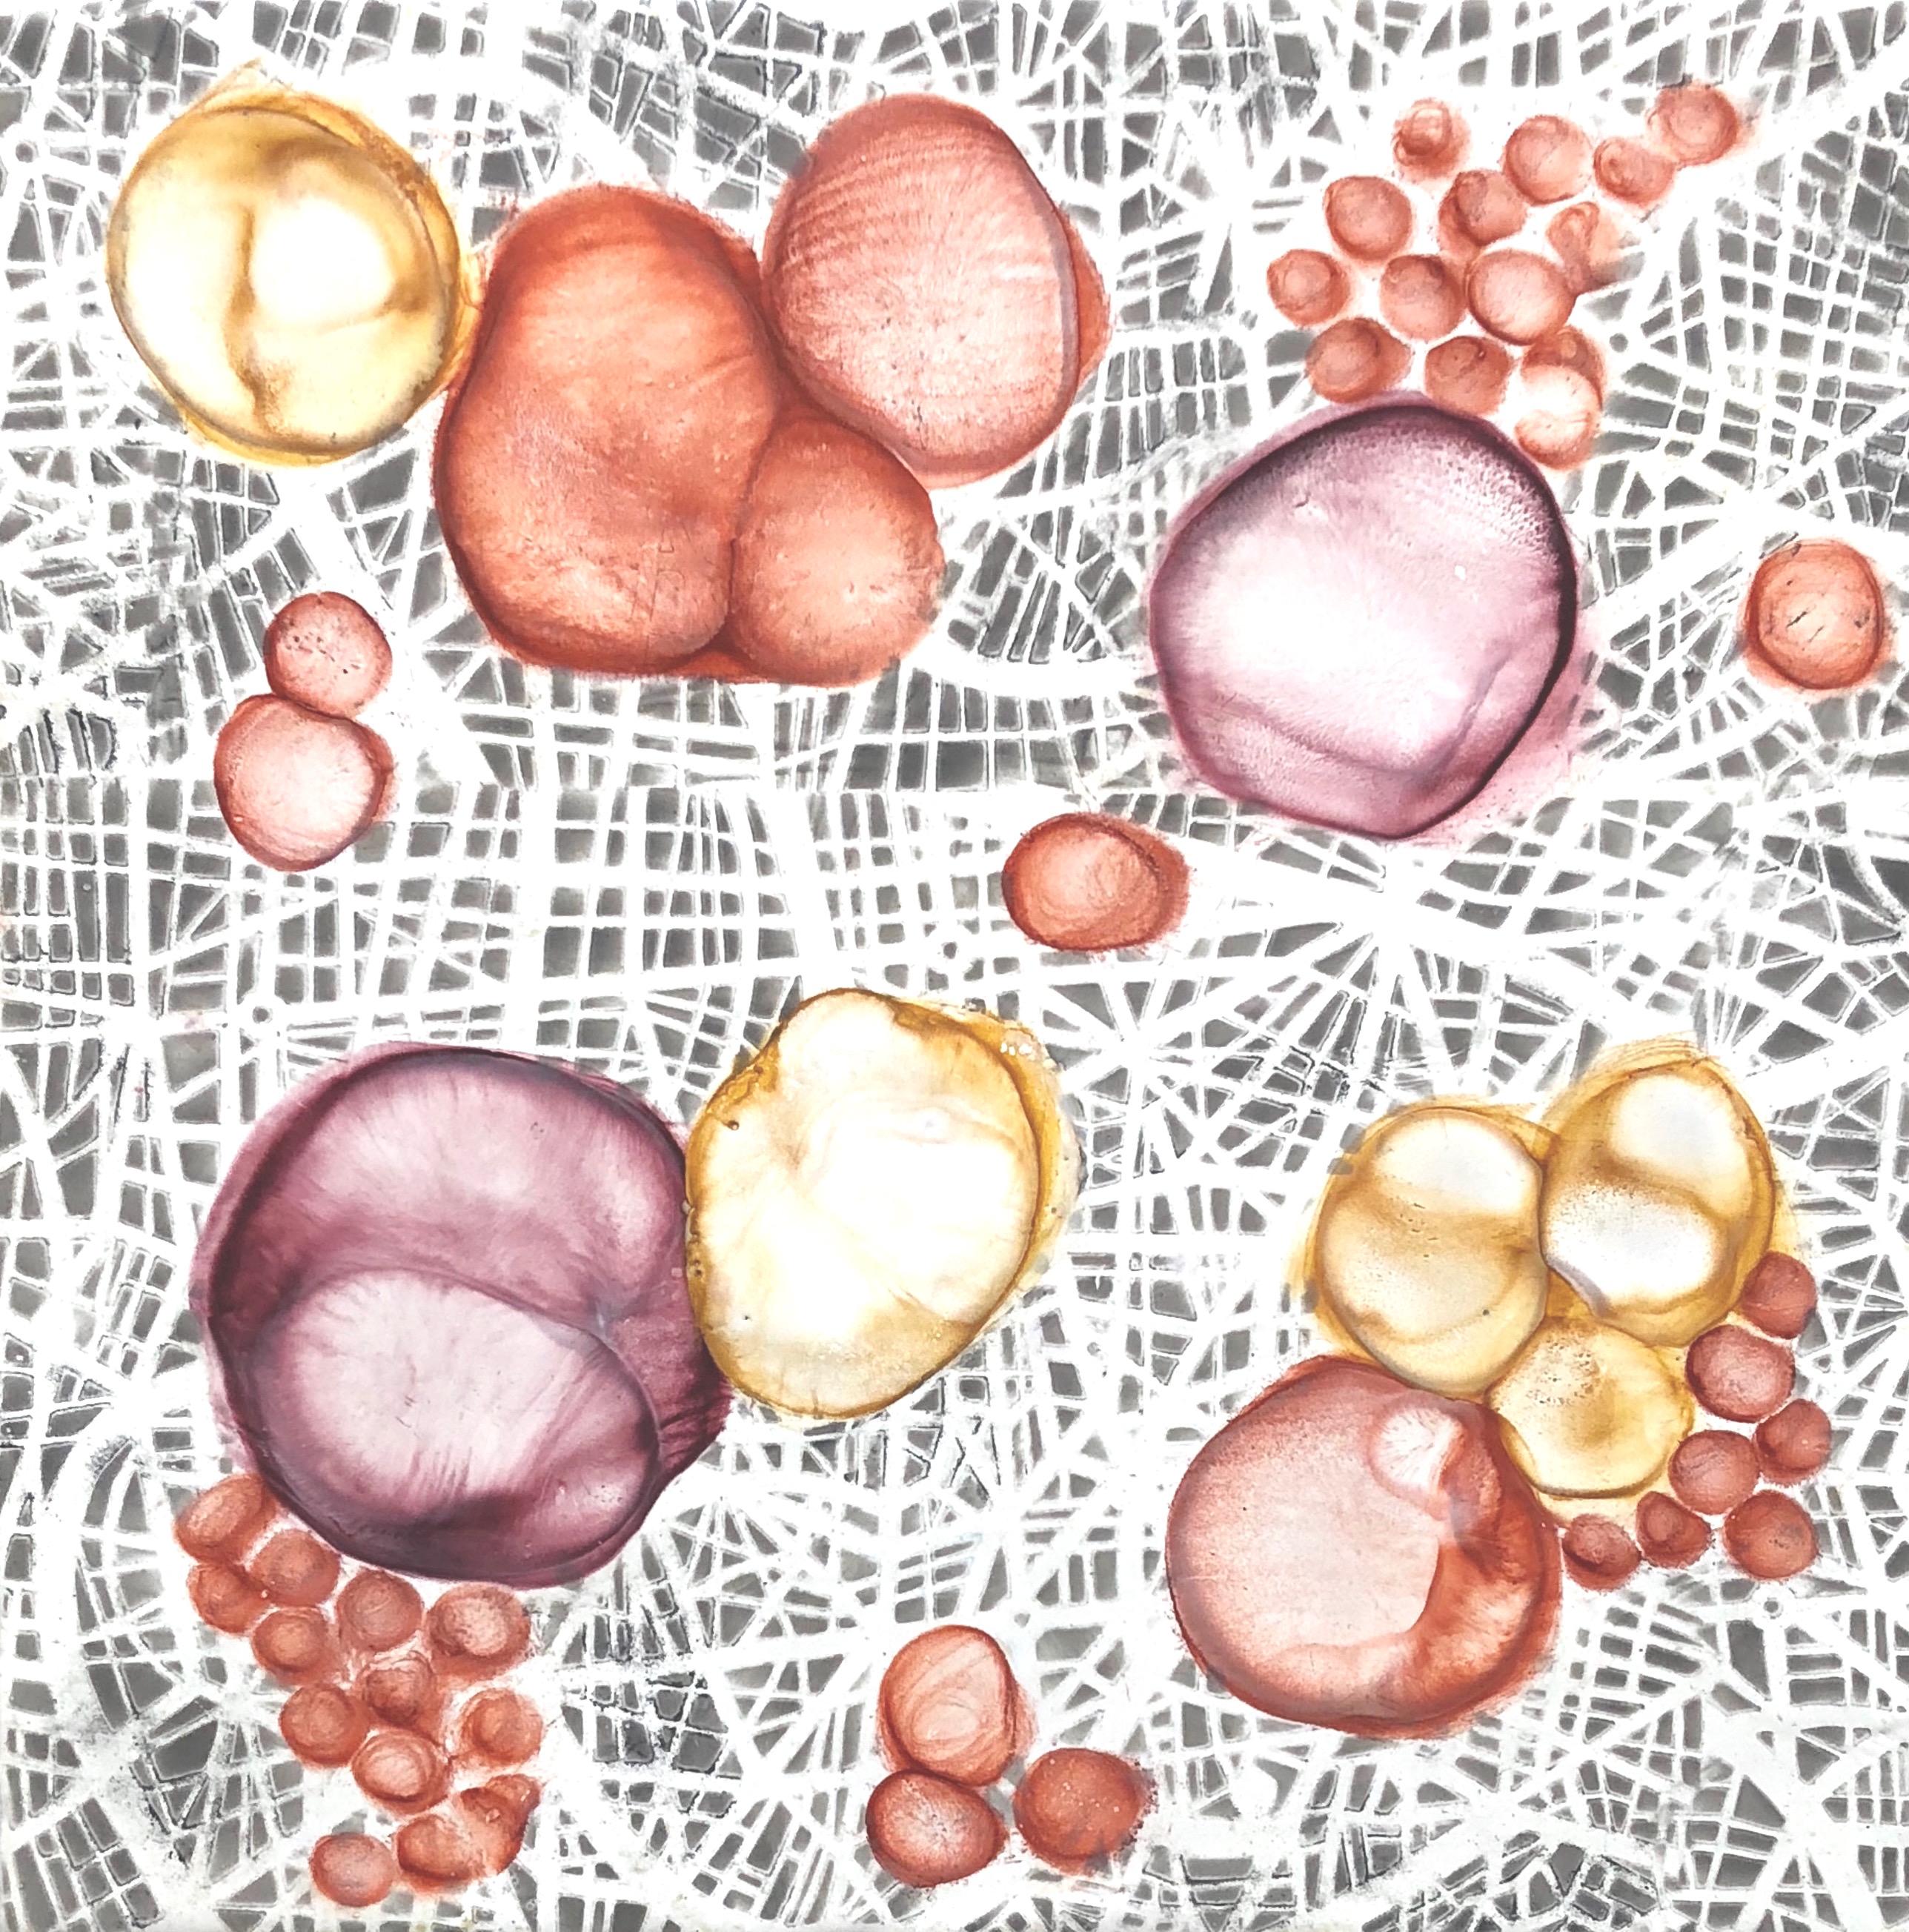 "Bio Networks 1", pastel, abstract, microscopic, rust, maroon, grey, encaustic - Mixed Media Art by Kay Hartung